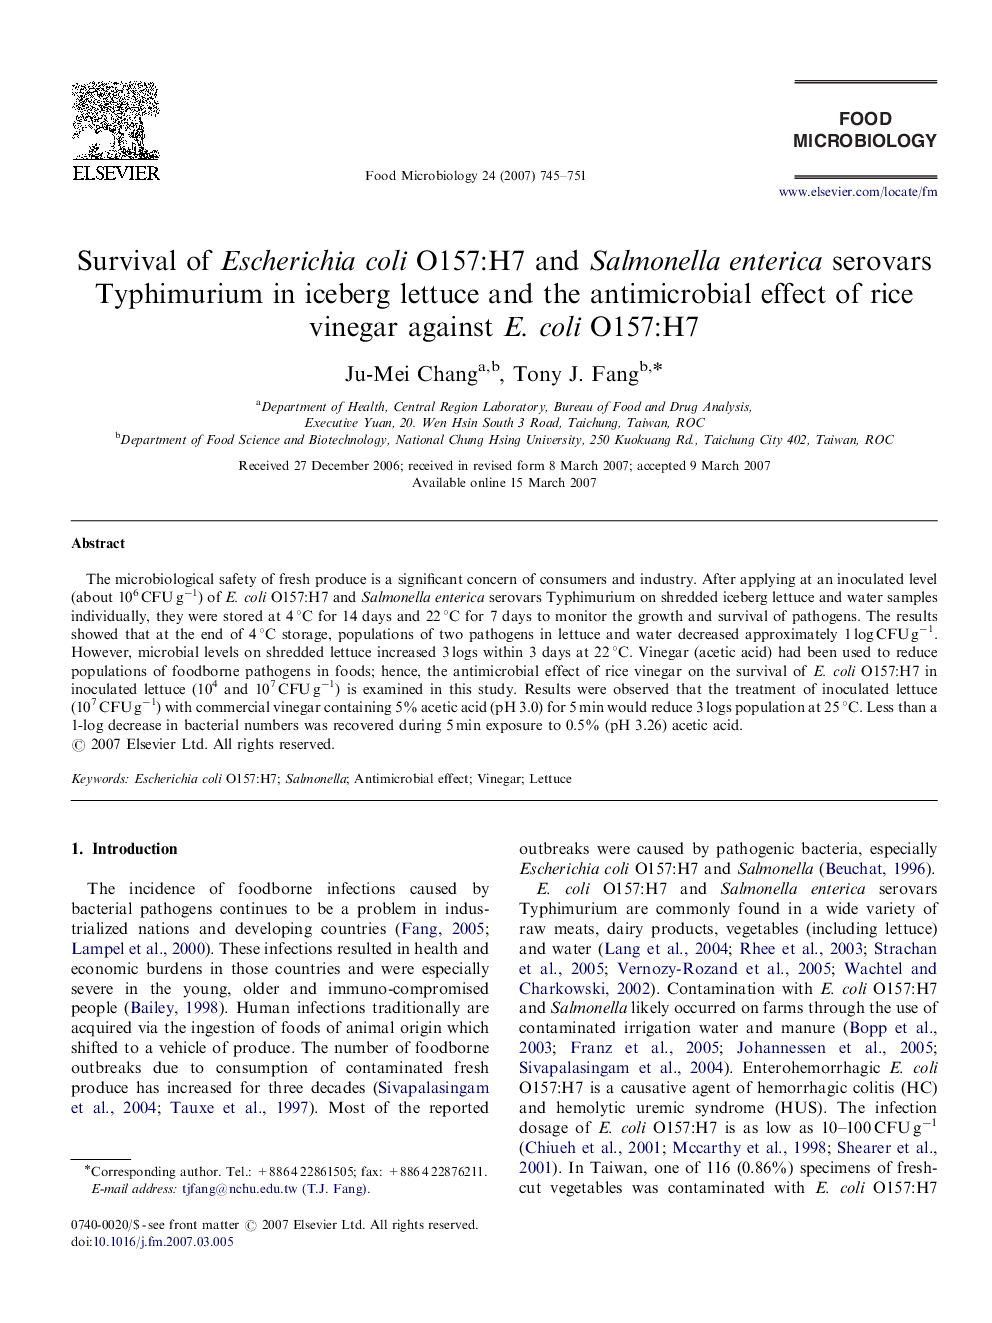 Survival of Escherichia coli O157:H7 and Salmonella enterica serovars Typhimurium in iceberg lettuce and the antimicrobial effect of rice vinegar against E. coli O157:H7